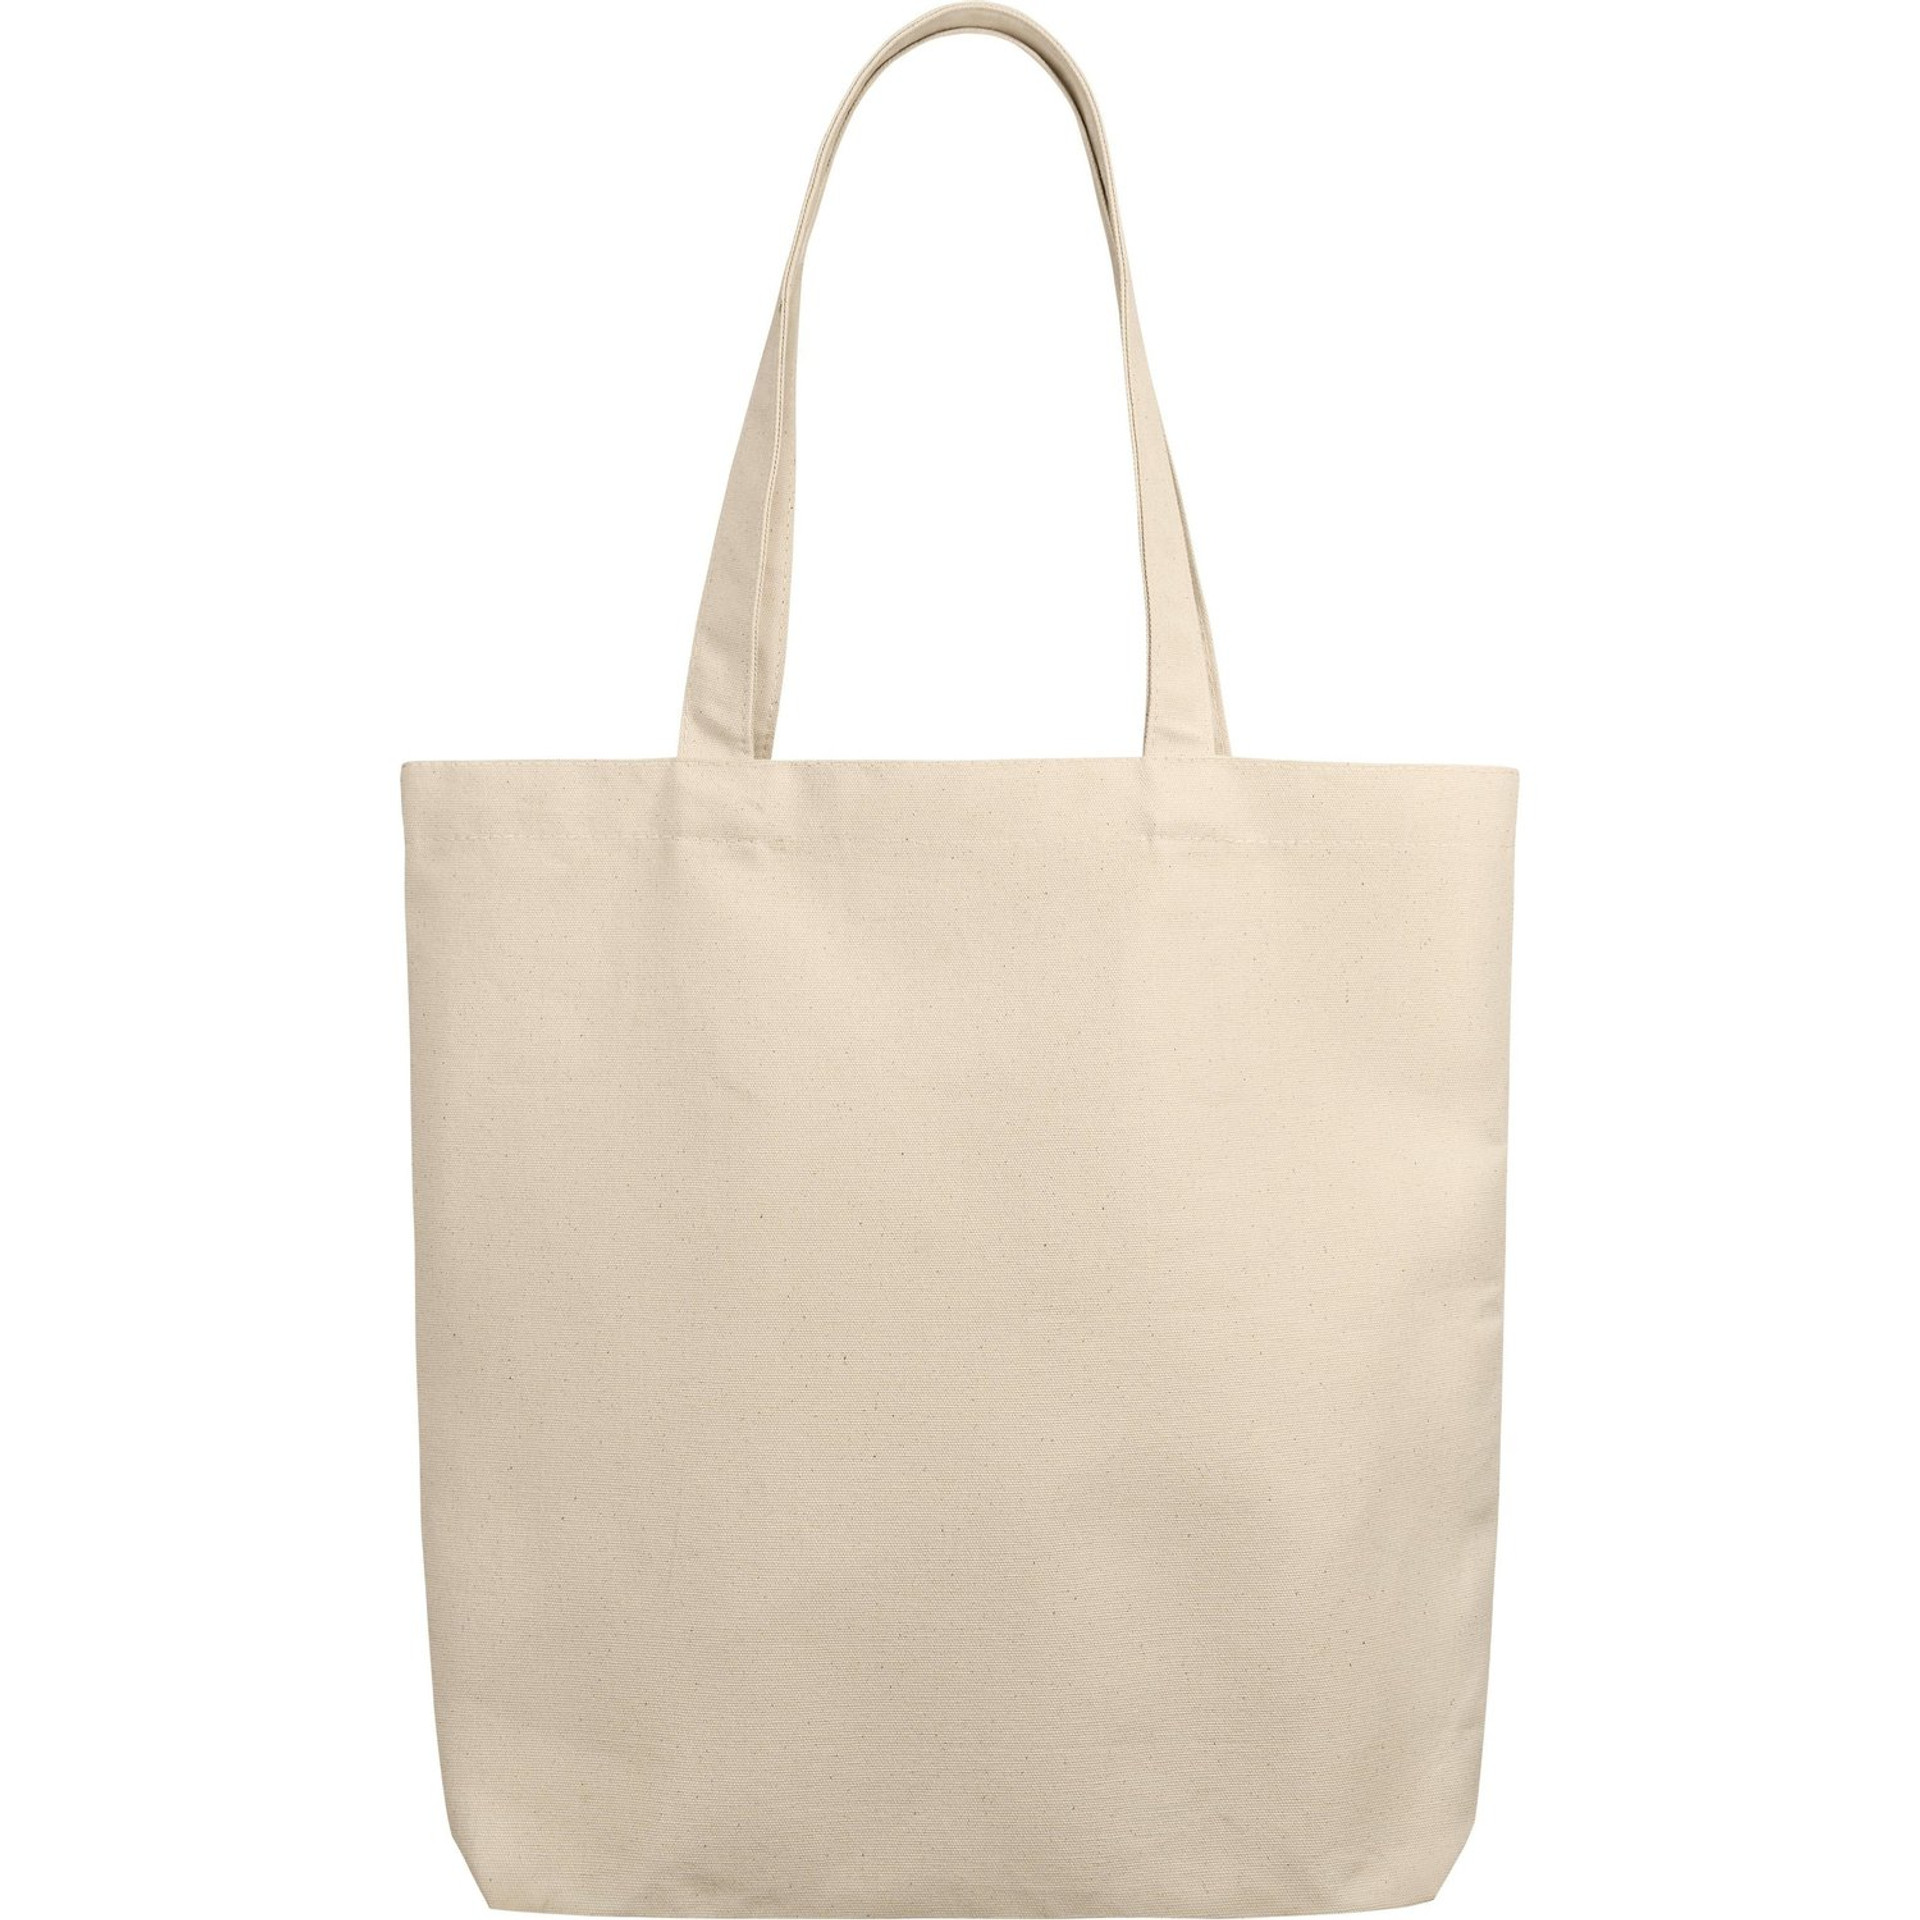 Wholesale Cotton Tote Bags - Custom Cotton Tote Bags in Bulk | BagzDepot